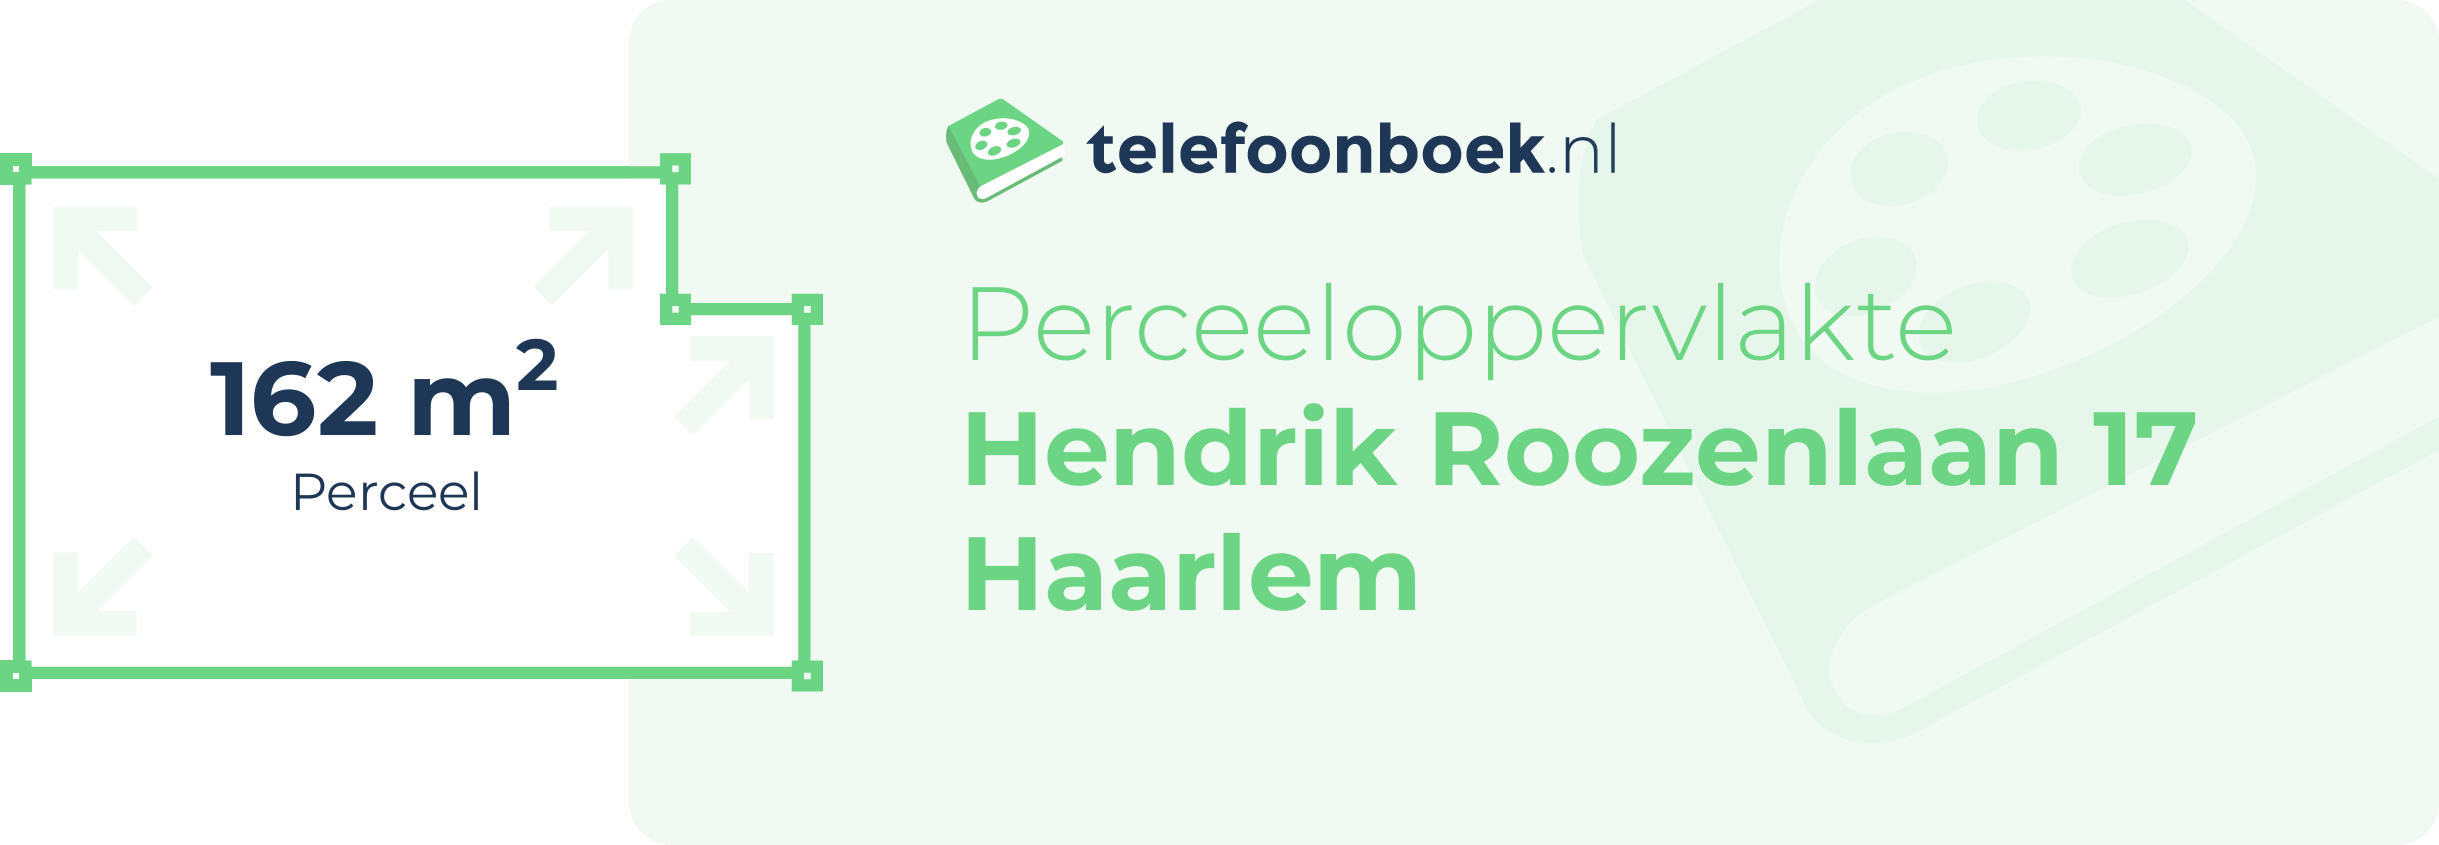 Perceeloppervlakte Hendrik Roozenlaan 17 Haarlem